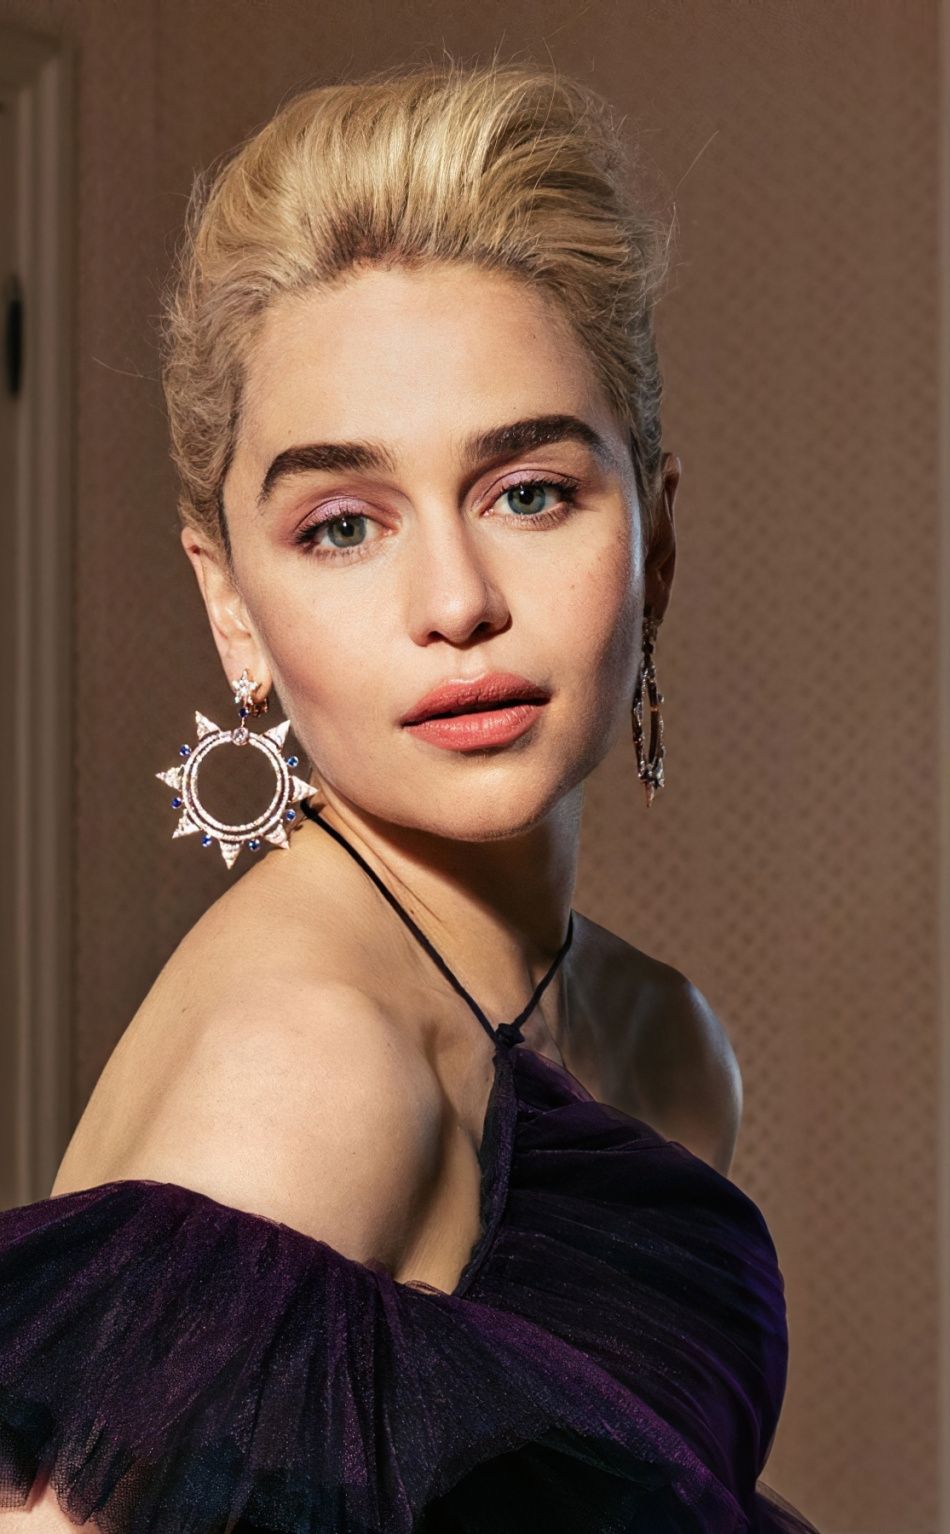 Emilia Clarke 2020 Beautiful Wallpapers